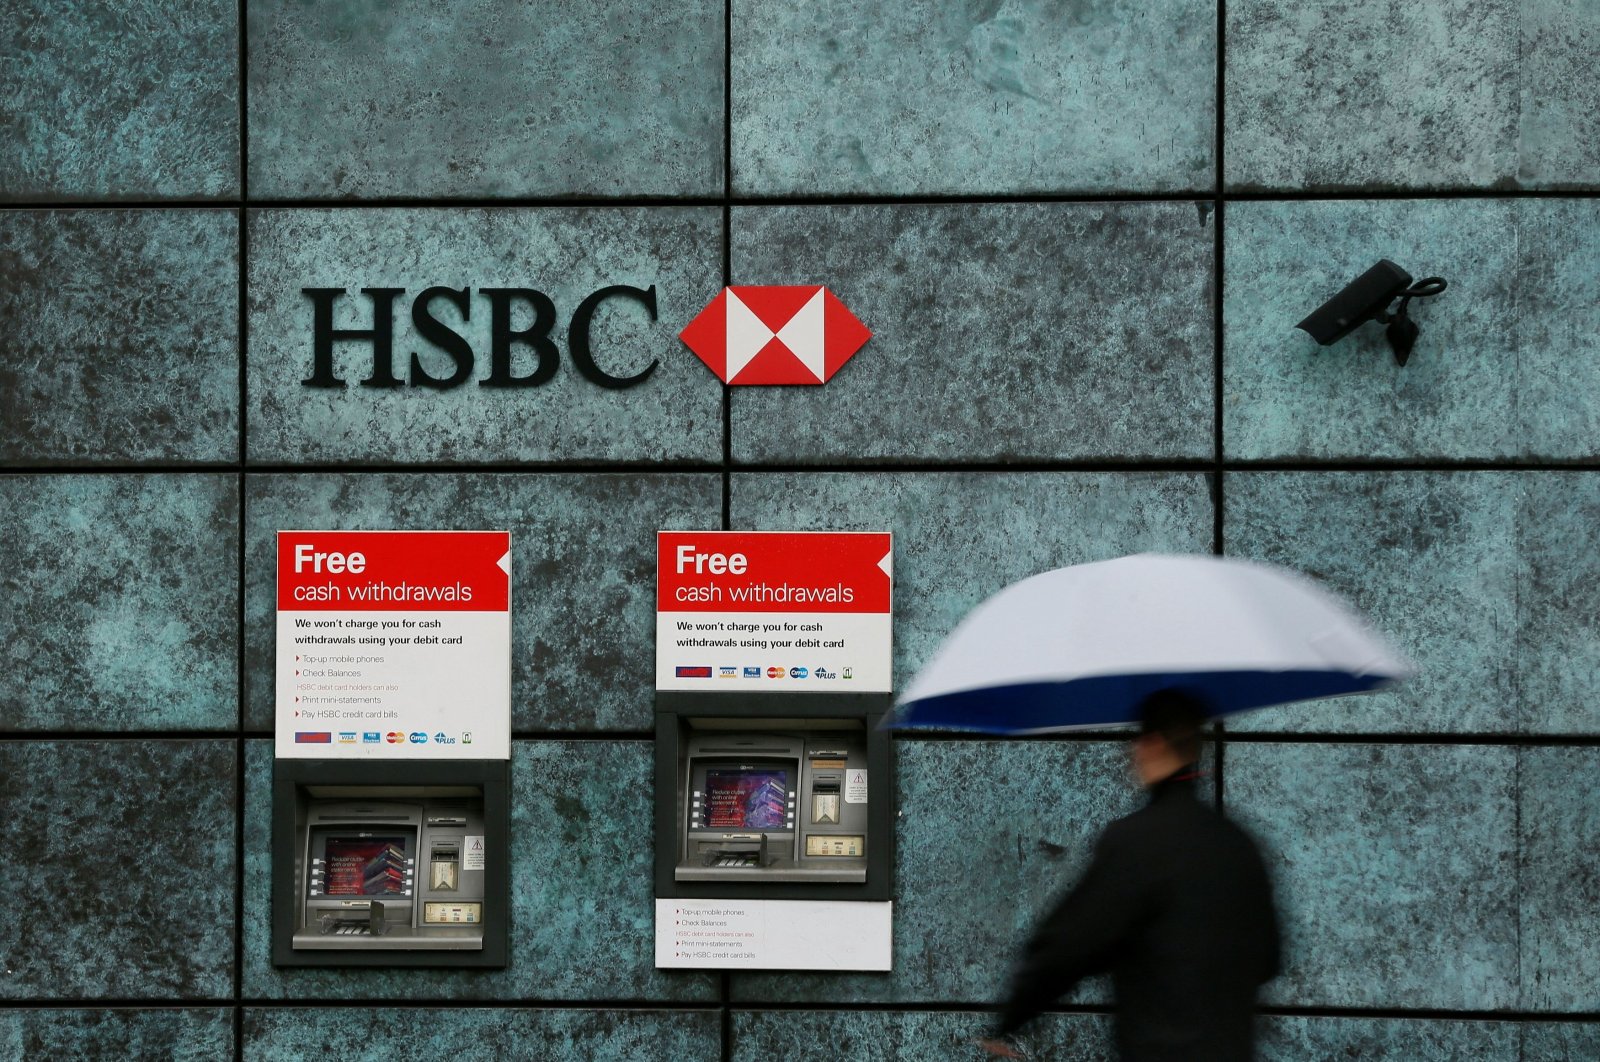 A man walks past an HSBC bank branch in London, Britain, Nov. 12, 2014. (Reuters Photo)